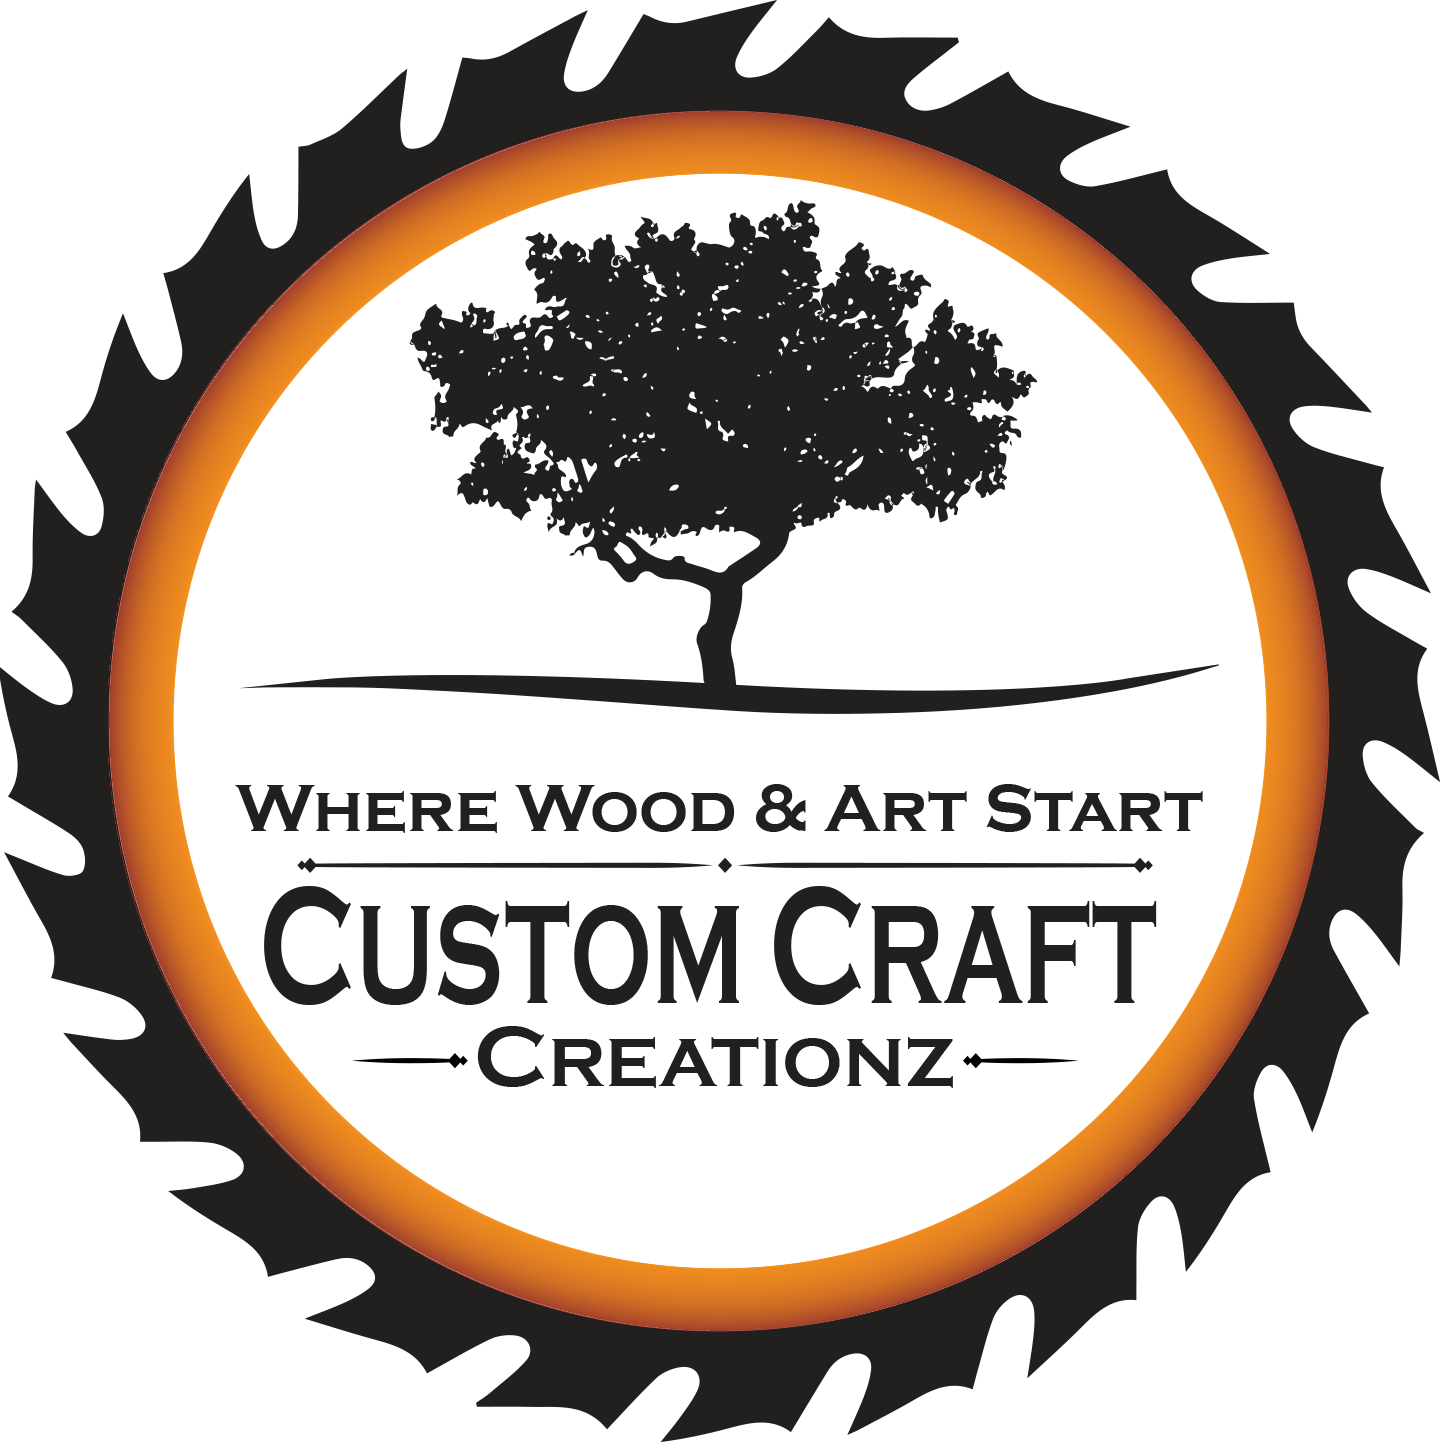 Custom Craft Creationz: Custom Furniture Design and Epoxy Products. Black Walnut Tables and Interior Design